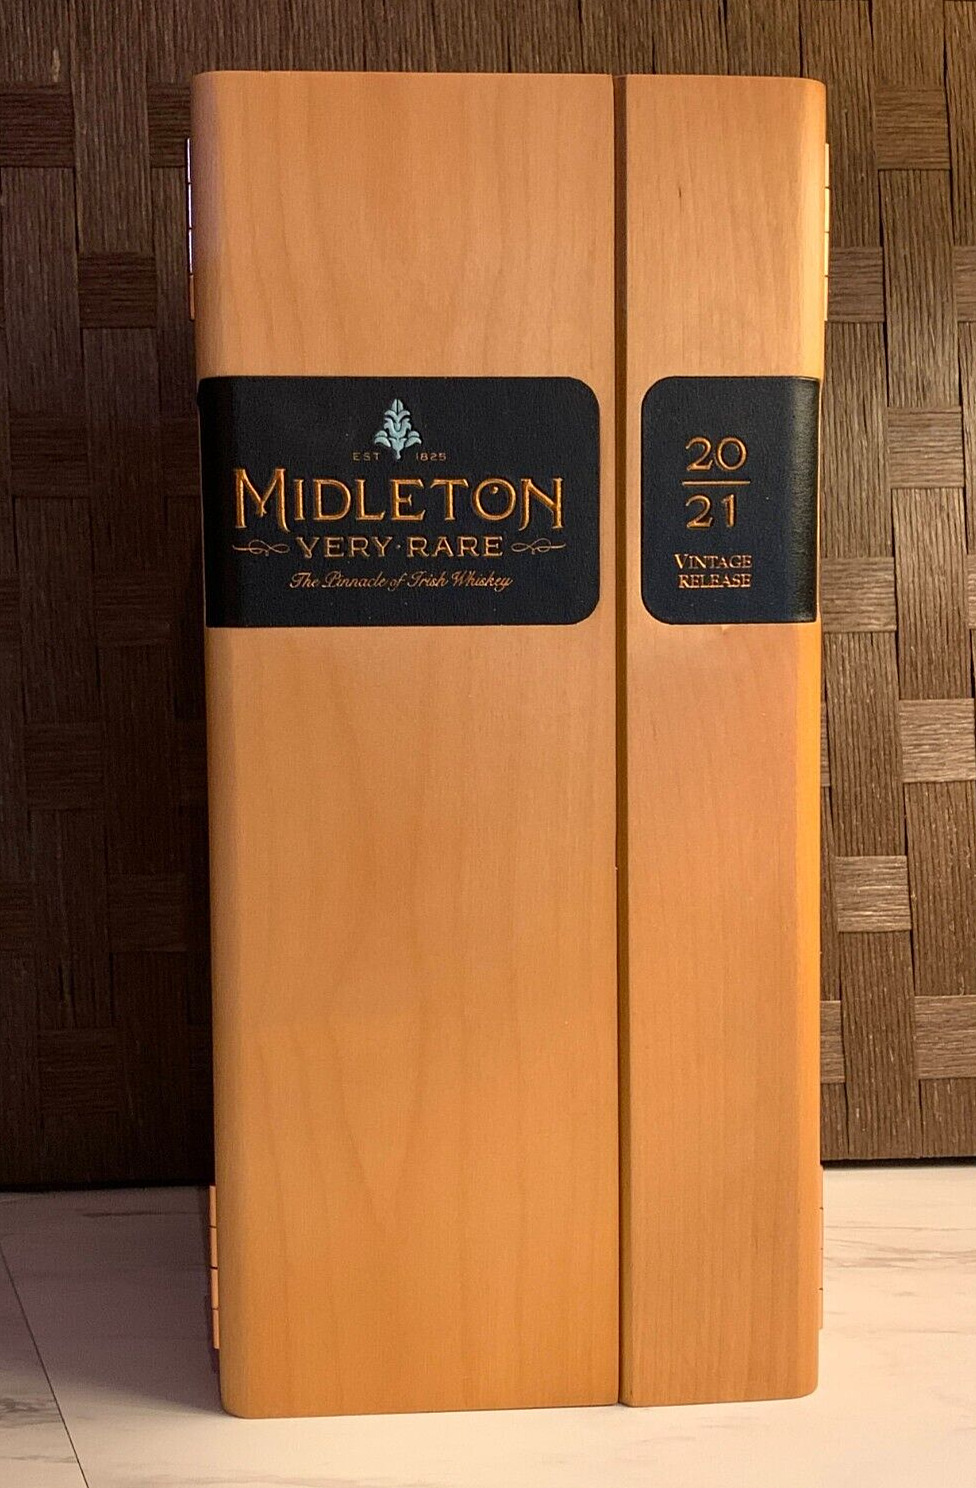 MIDLETON Very Rare Irish Whiskey EMPTY Wood Box w/Certificate 2021 VTG Release